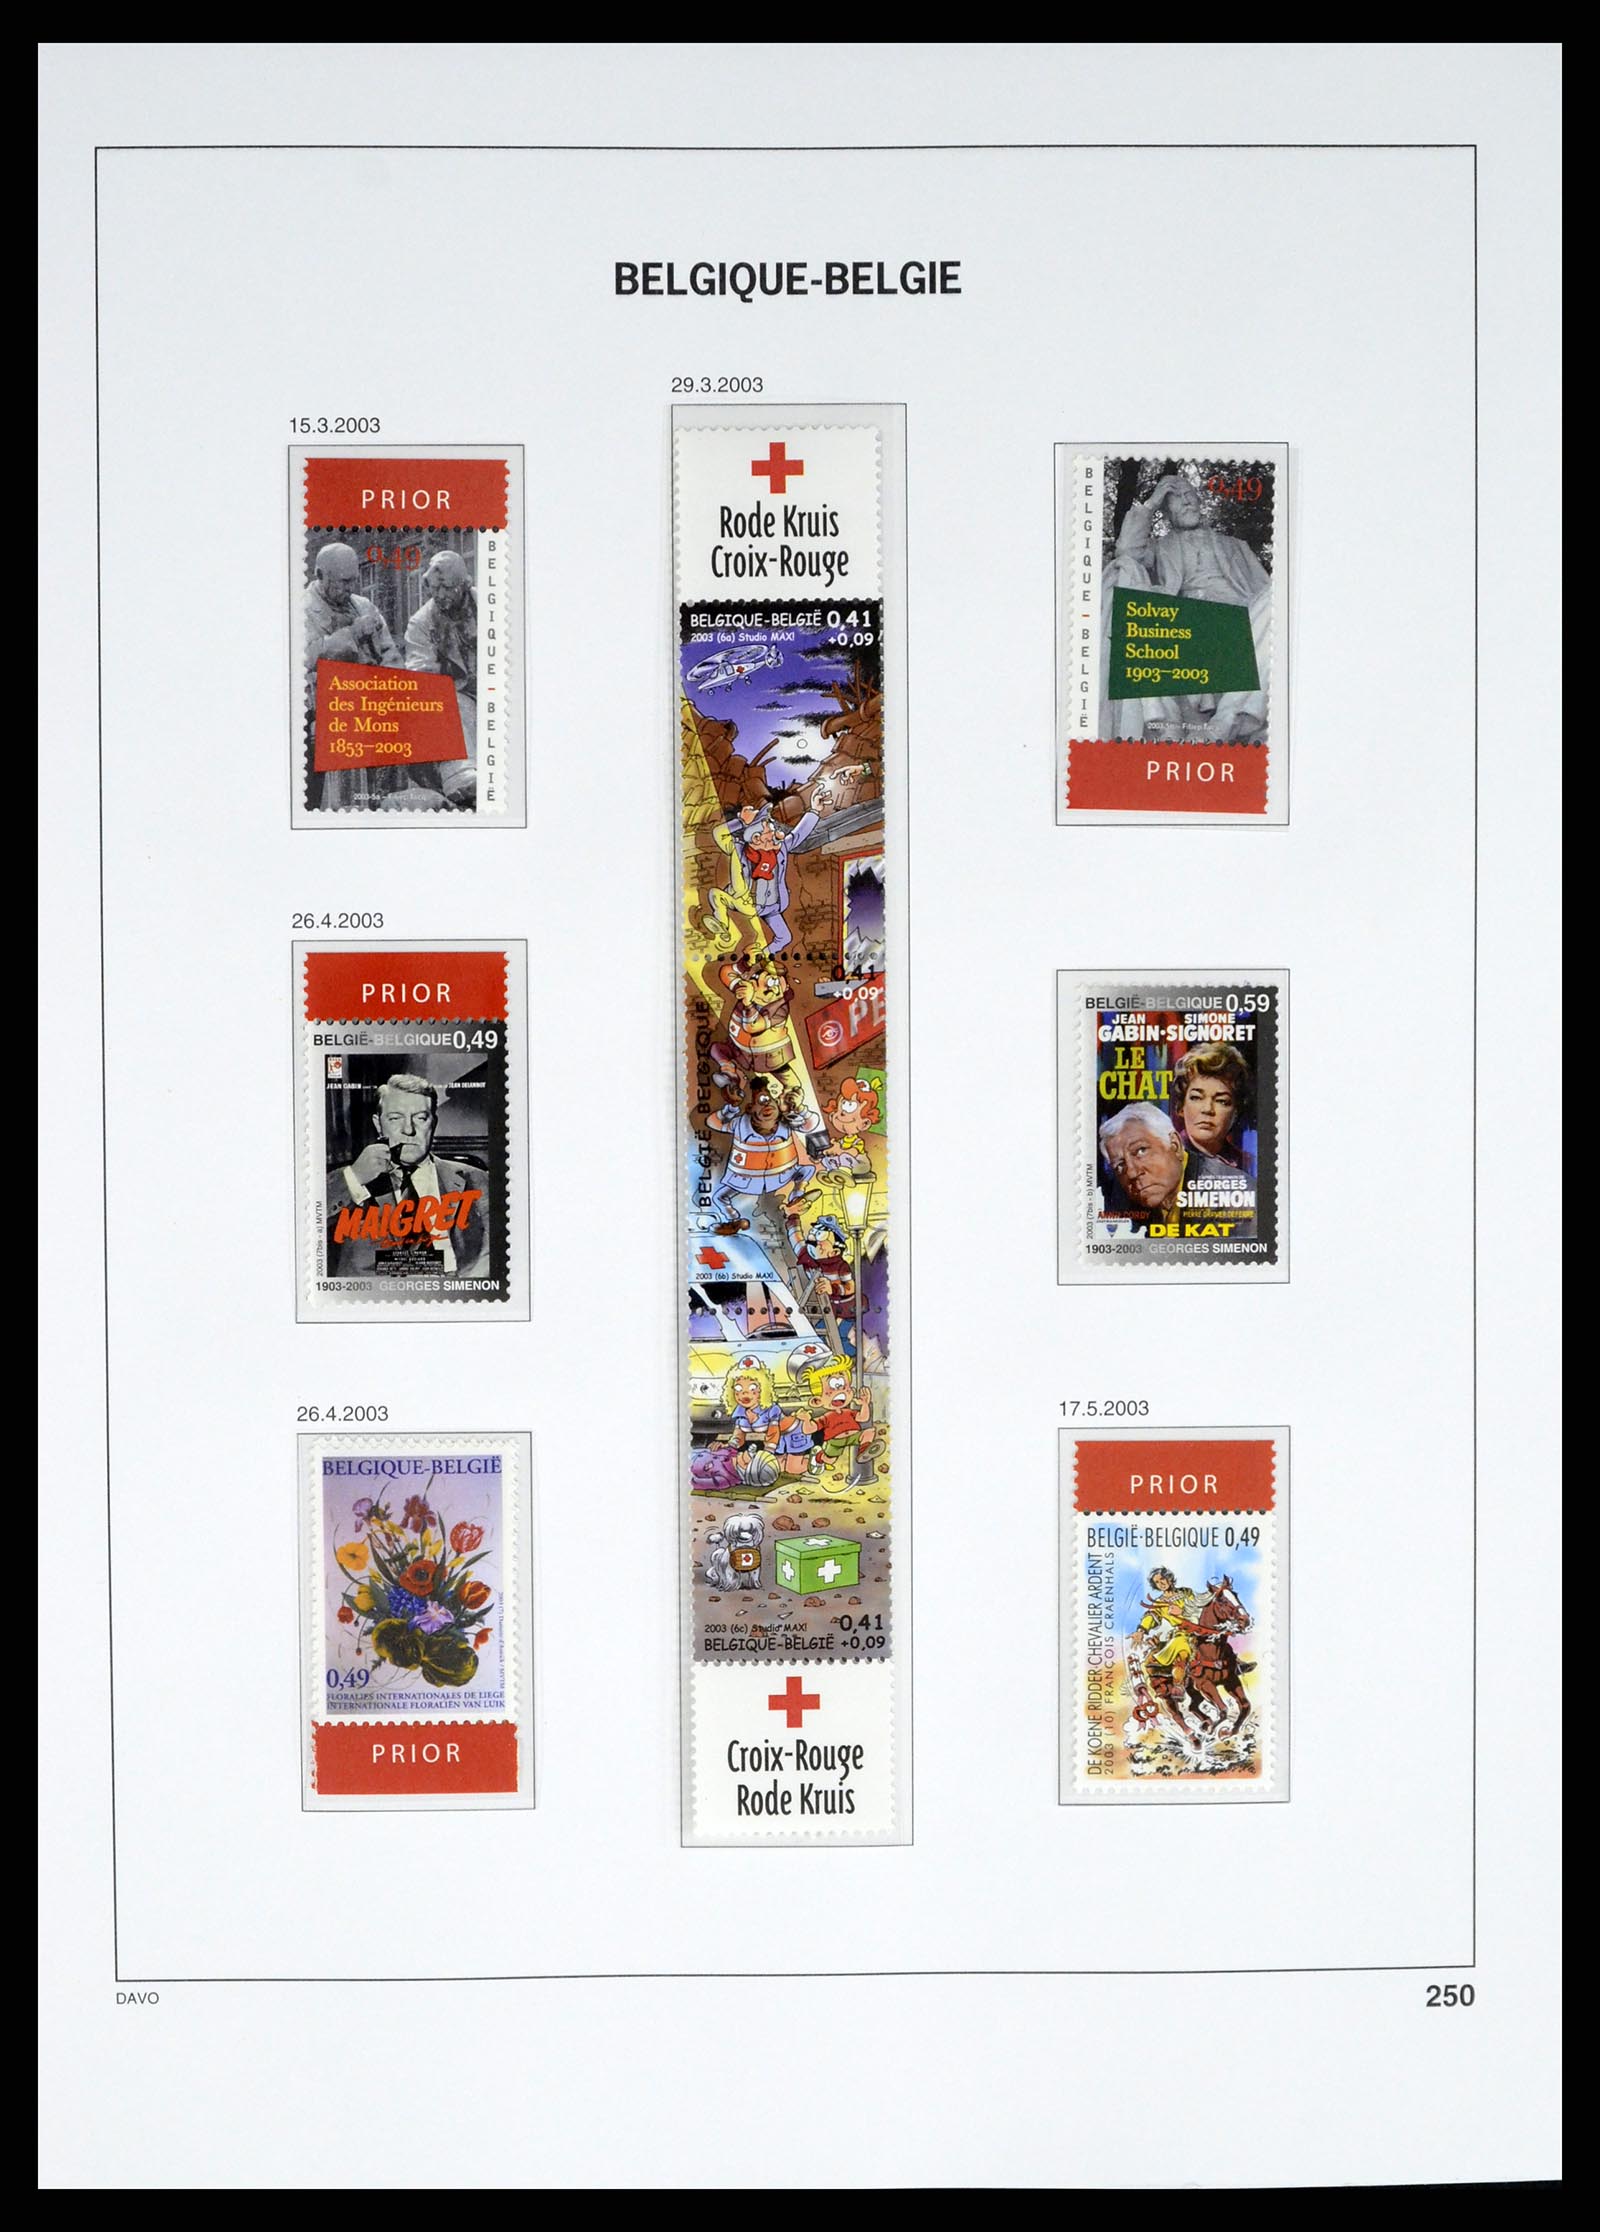 37368 201 - Stamp collection 37368 Belgium 1969-2003.